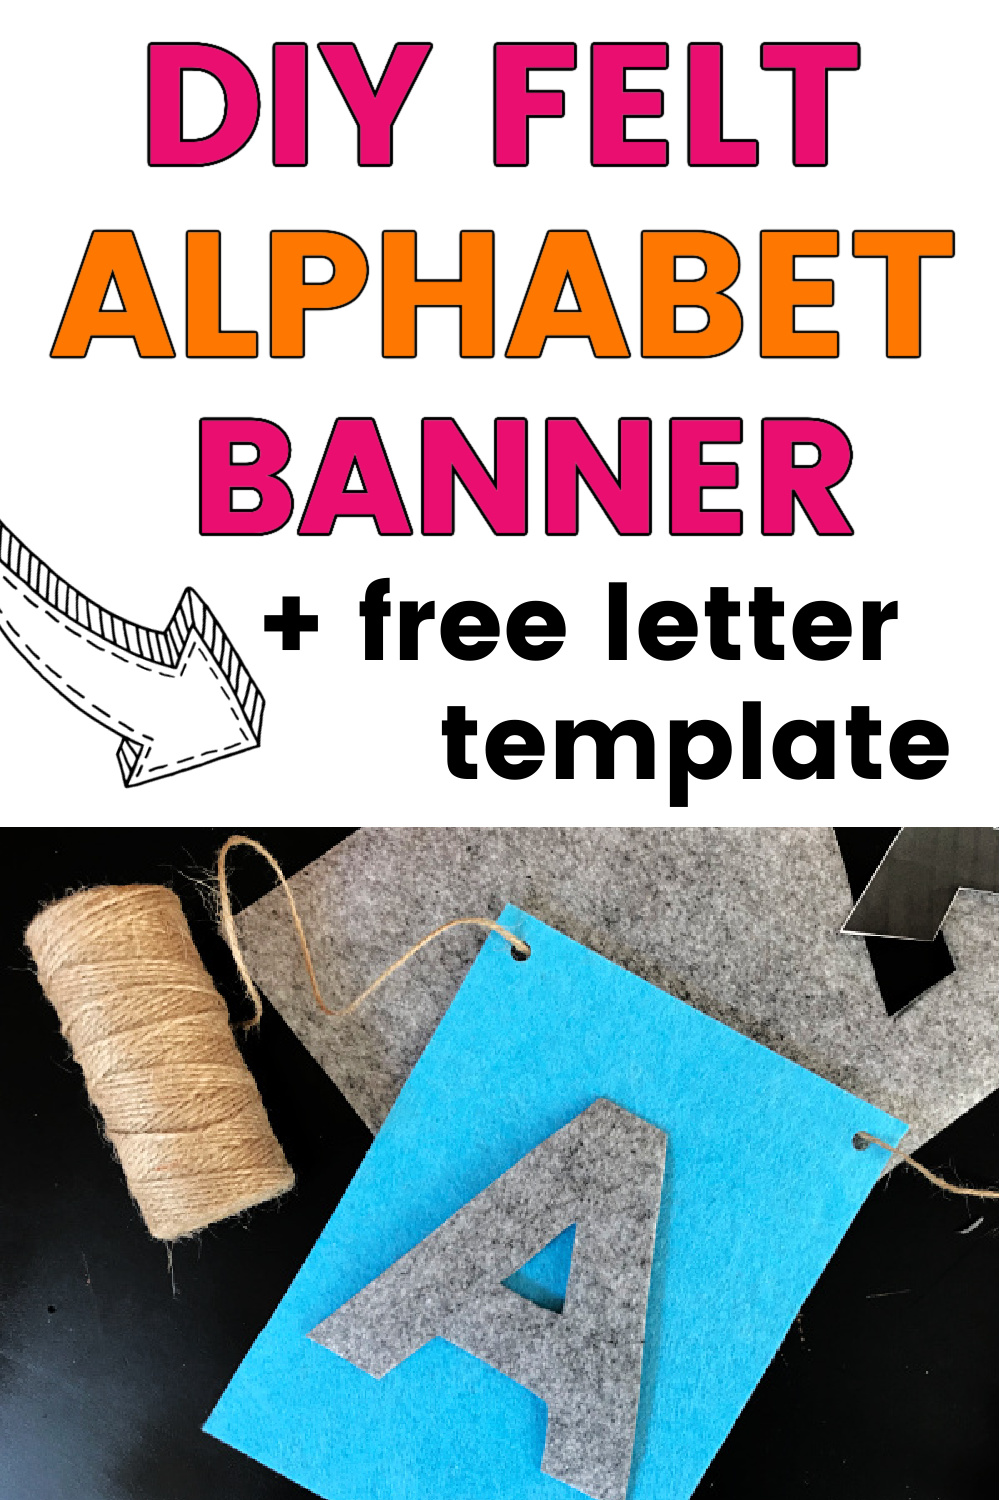 gray felt letter "A" on blue felt rectangle next to twine spool, with text overlay, "DIY Felt Alphabet Banner + free letter template"